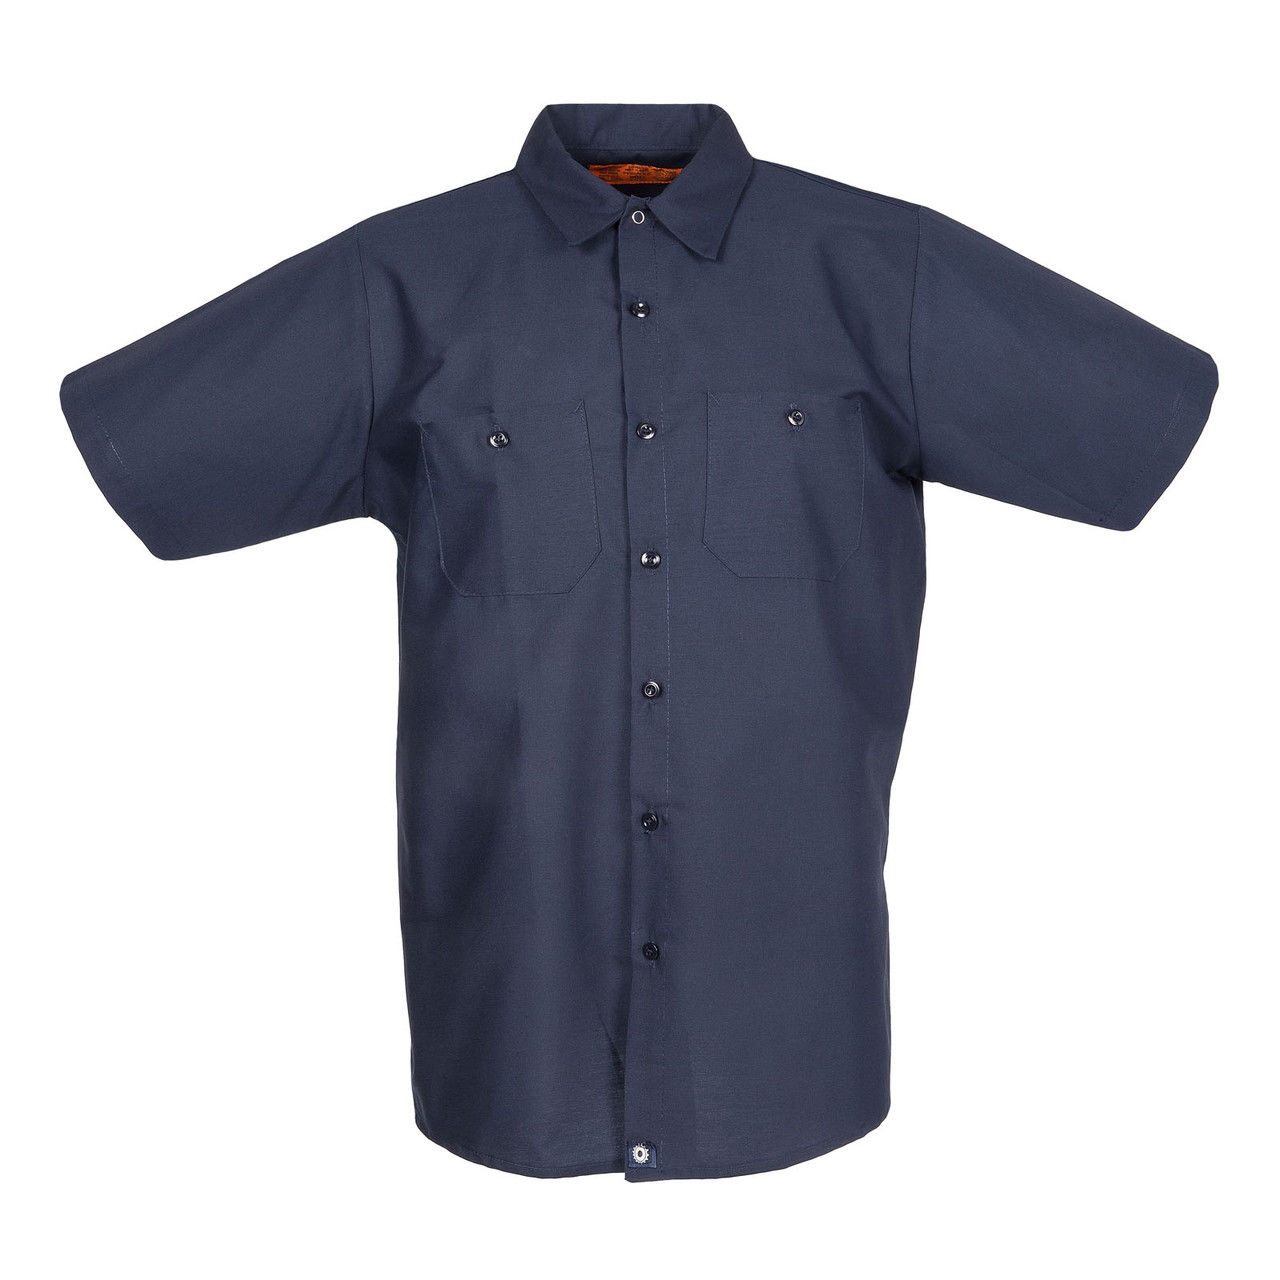 Can you provide a description of the men's navy blue short sleeve work shirt?